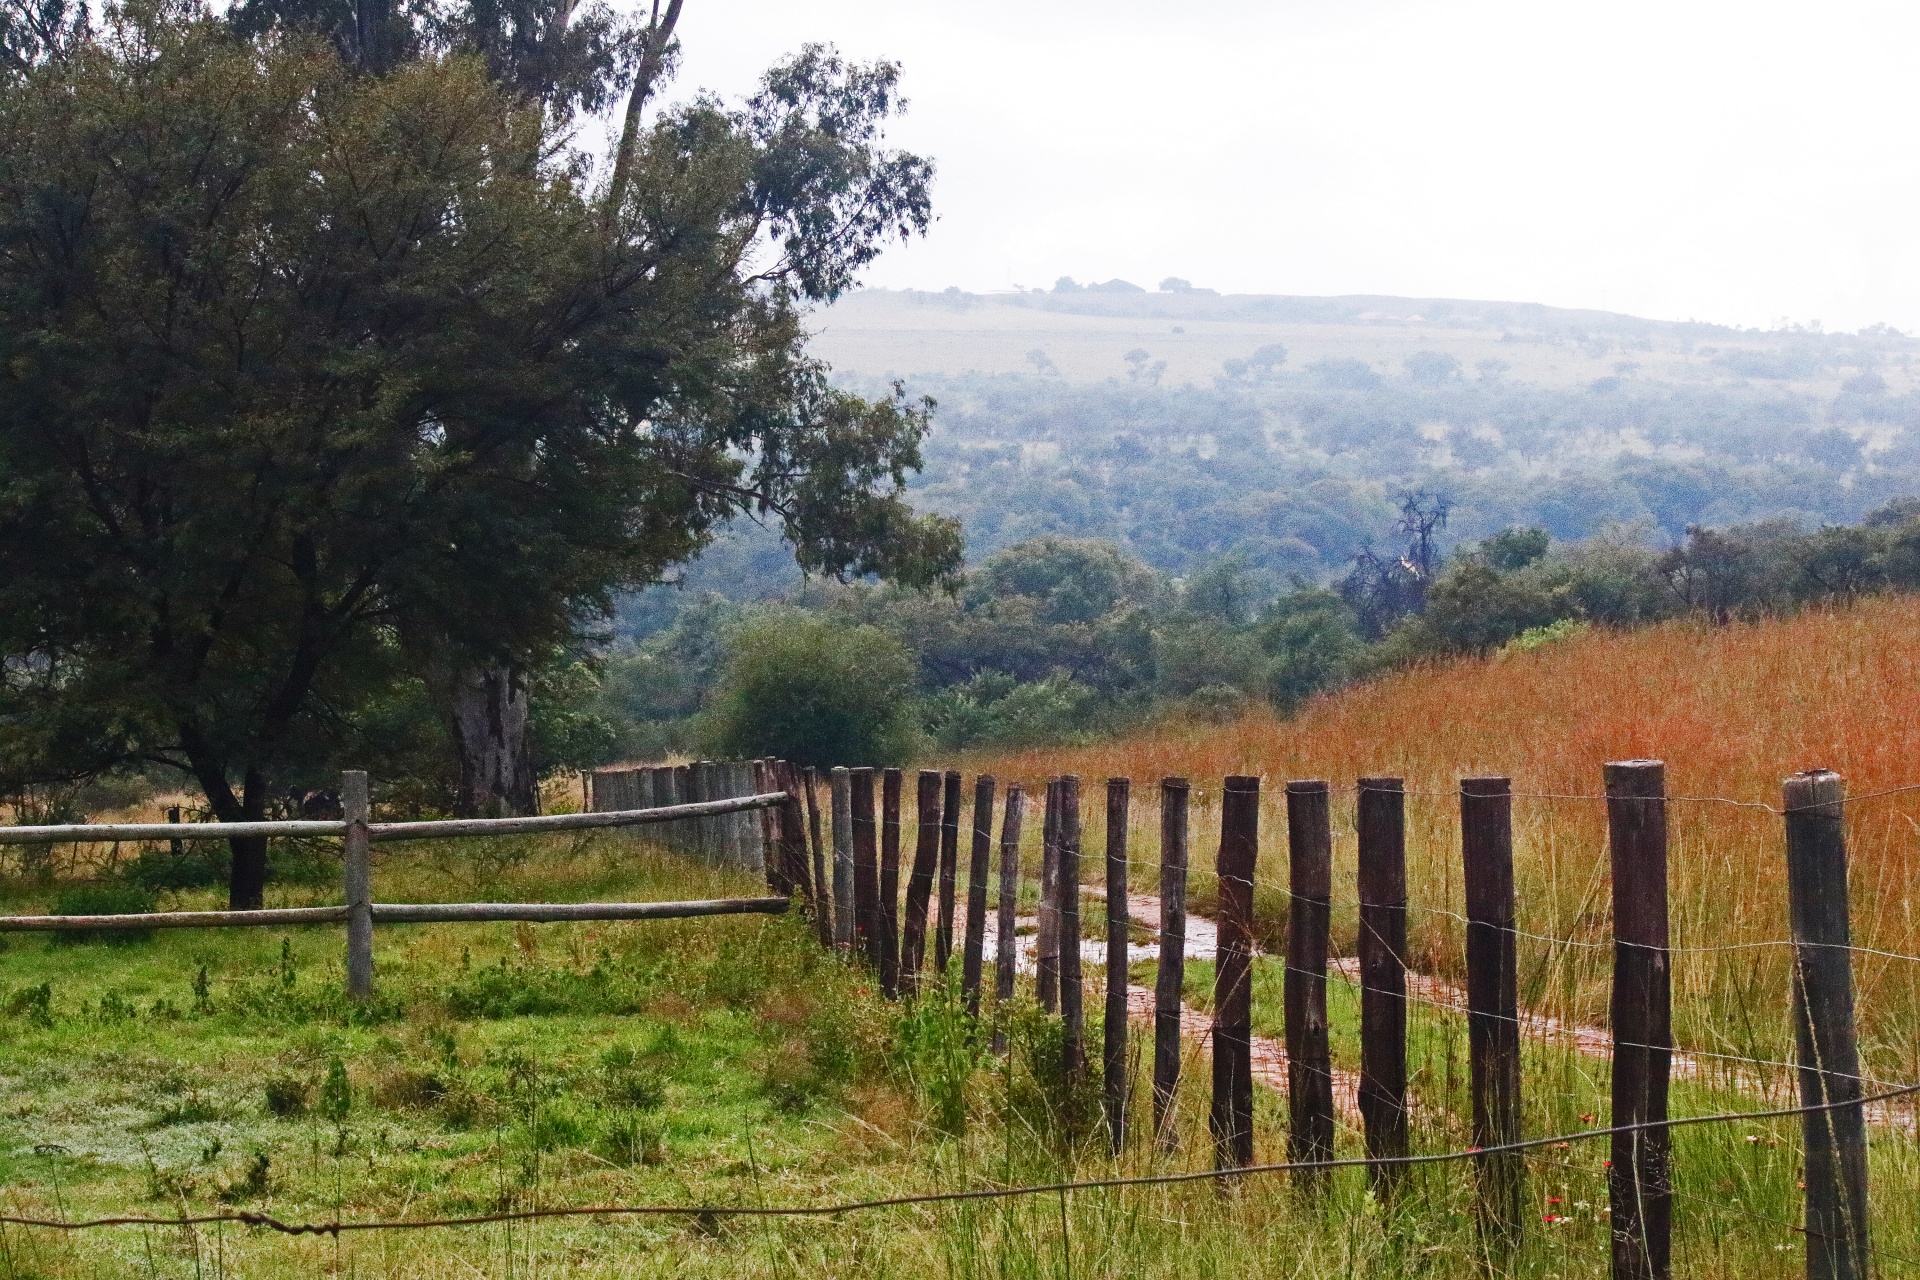 View Of Fences In A Farm Scene